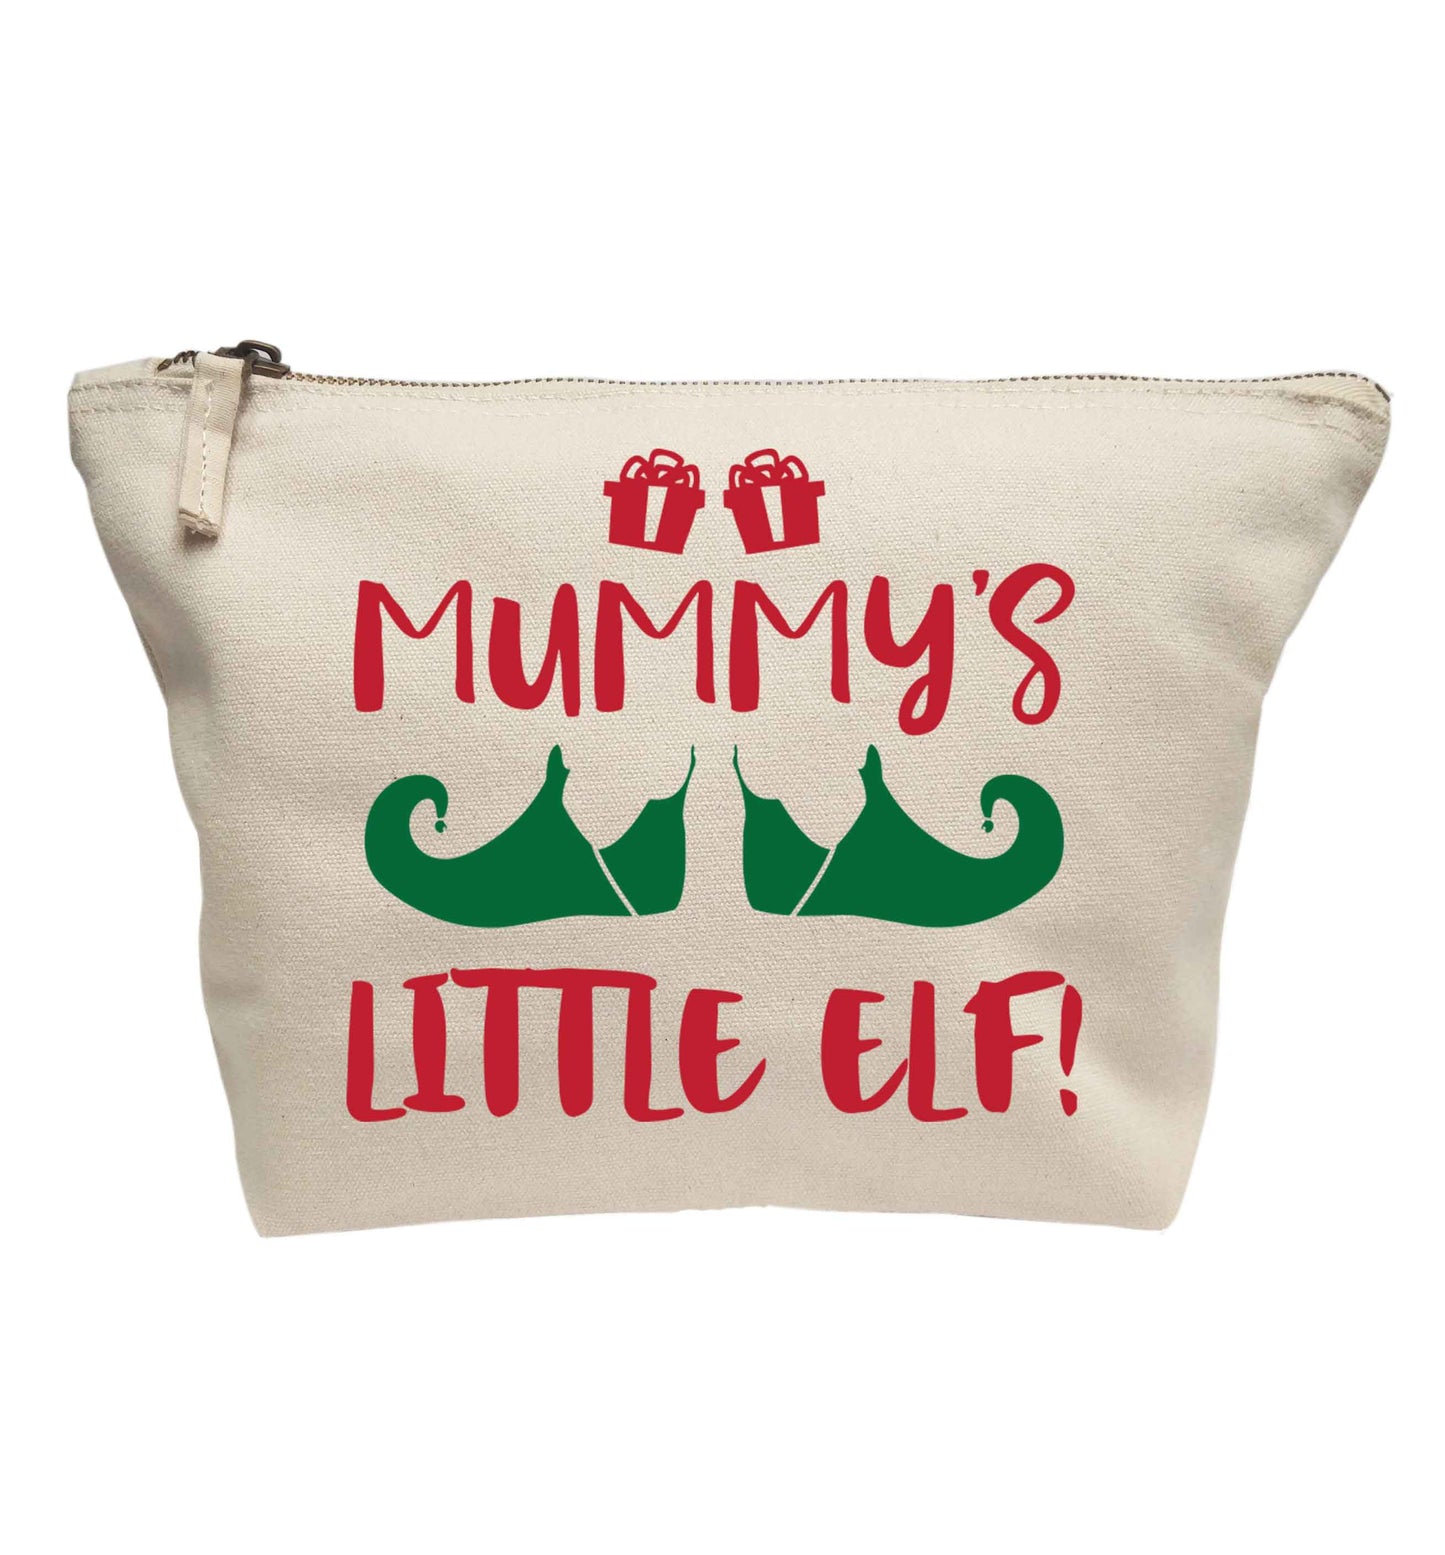 Mummy's little elf | makeup / wash bag